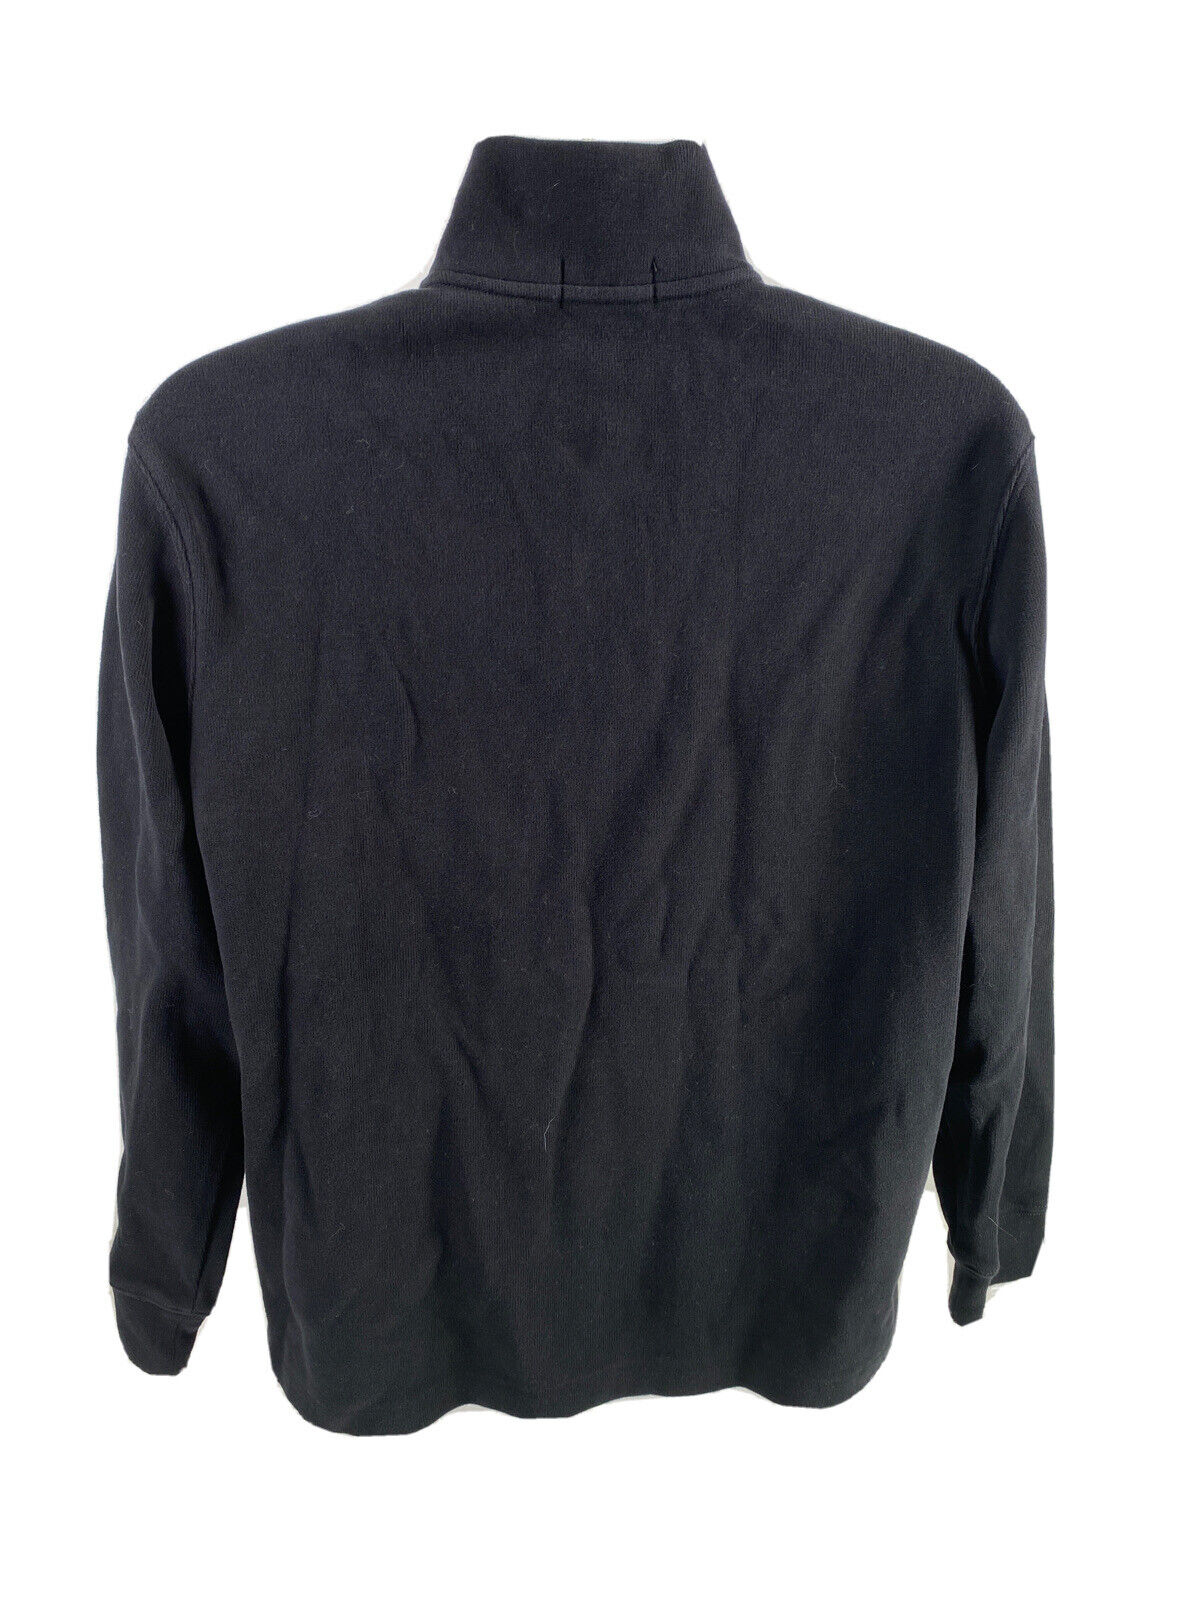 Polo Ralph Lauren Suéter negro de manga larga con cremallera de 1/4 para hombre - L